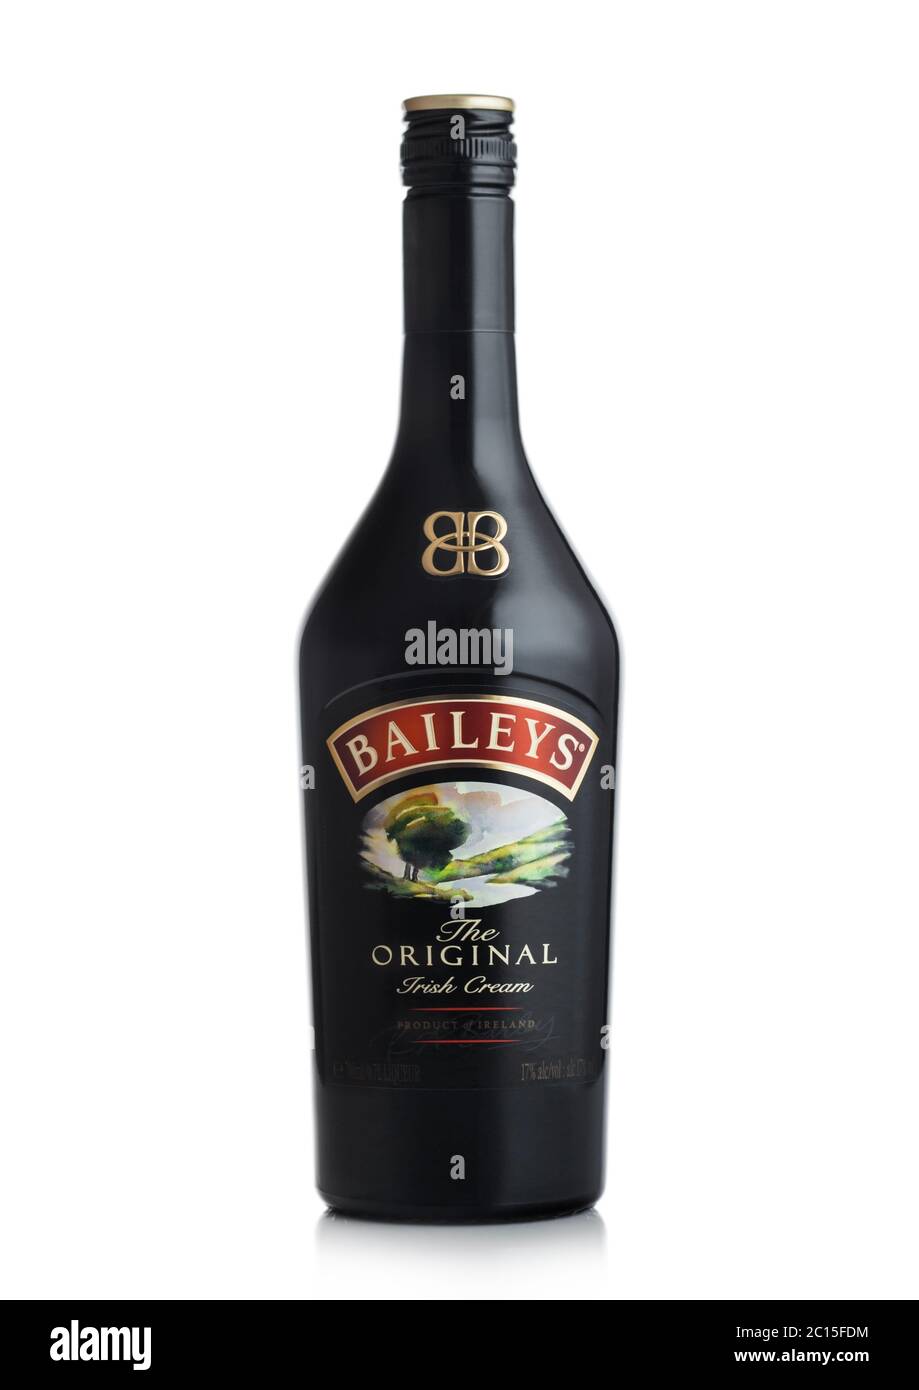 LONDON, UK - JUNE 02, 2020: Bottle of Baileys Original Irish Cream on white background. Irish whiskey and cream based liqueur. Stock Photo